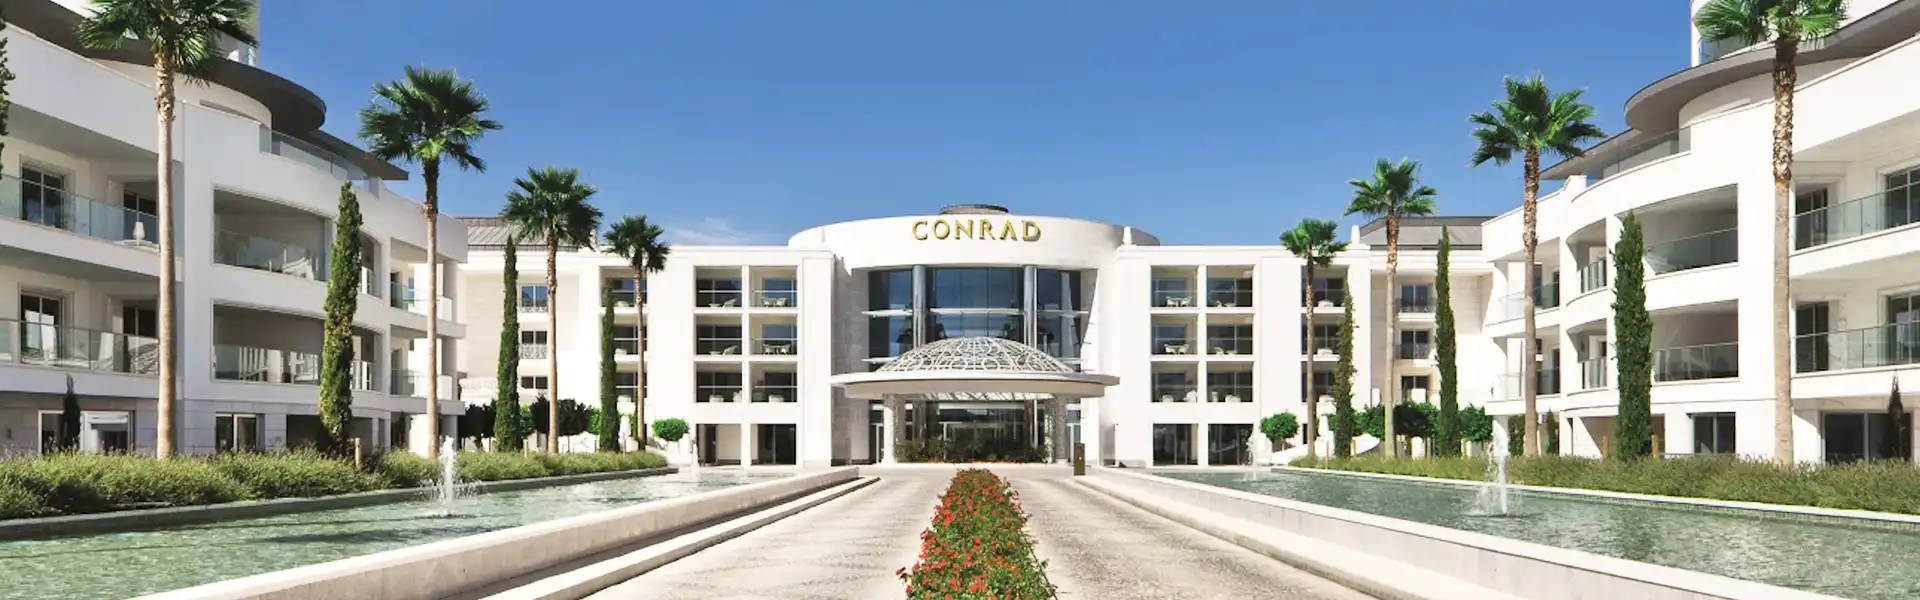 Bilyana Golf-Conrad Hotel Algarve